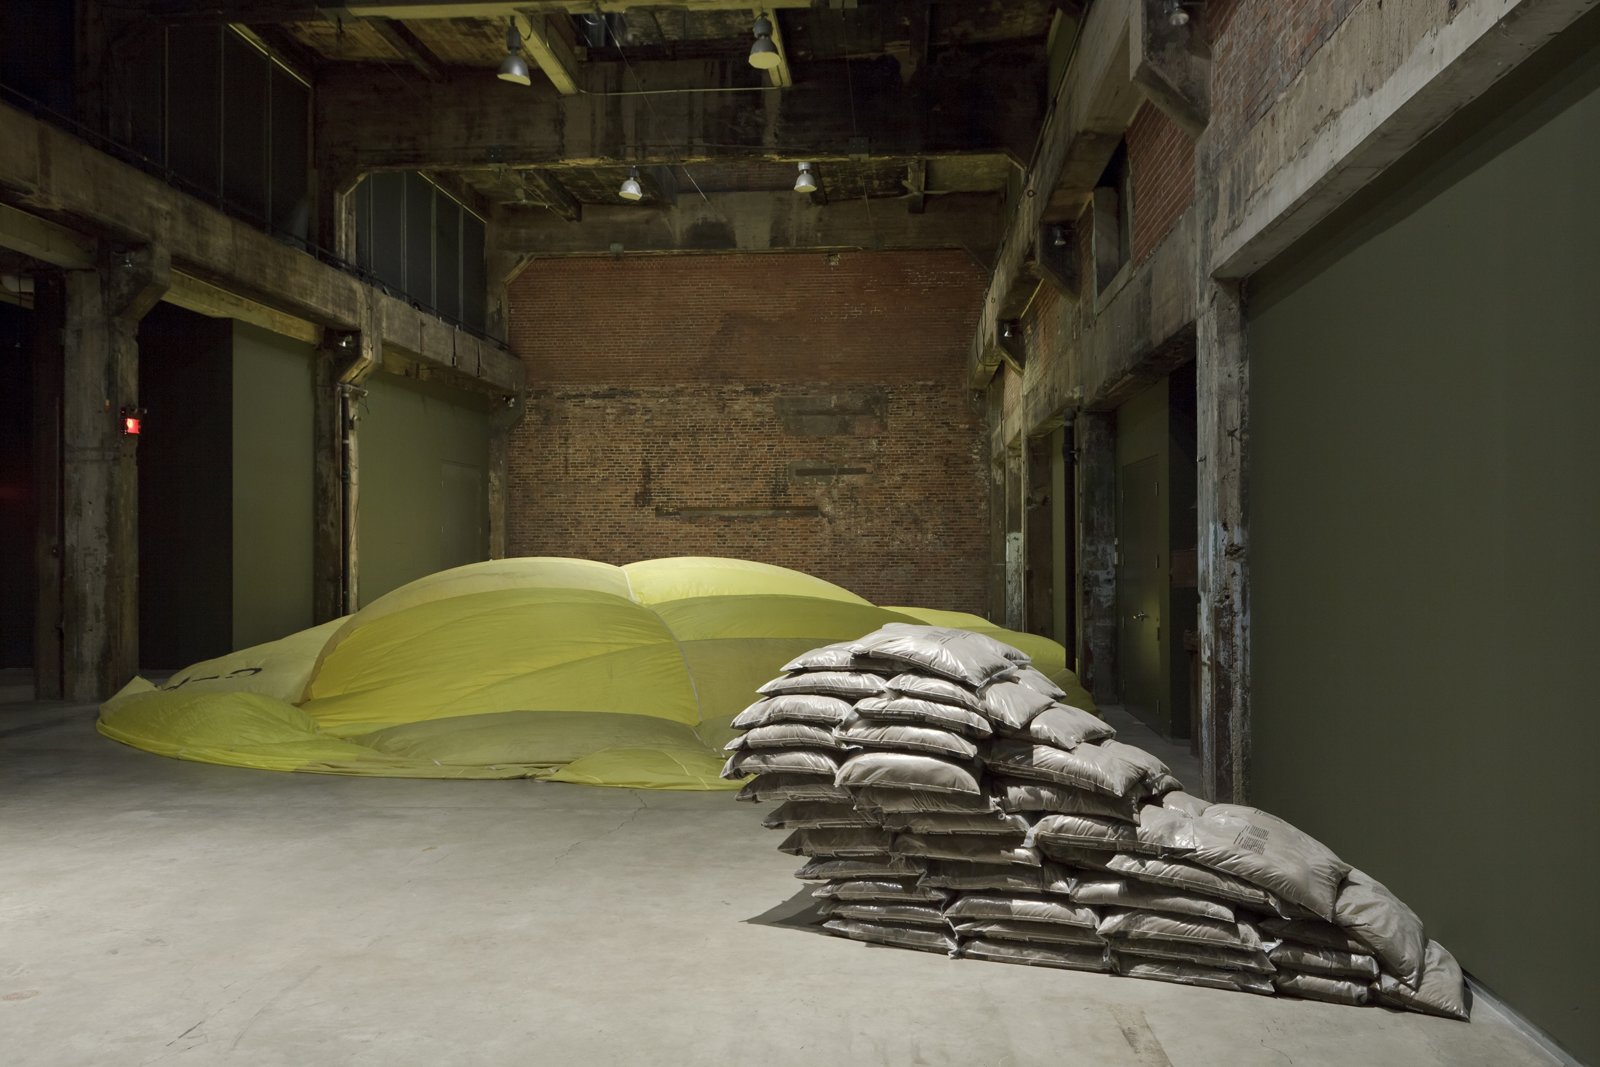 Abbas Akhavan, Like a bat working afraid of its own shadow, 2012, stacked sandbags, 118 x 79 x 59 in. (300 x 200 x 150 cm). Installation view, Beacon, Darling Foundry, Montreal, Canada, 2012